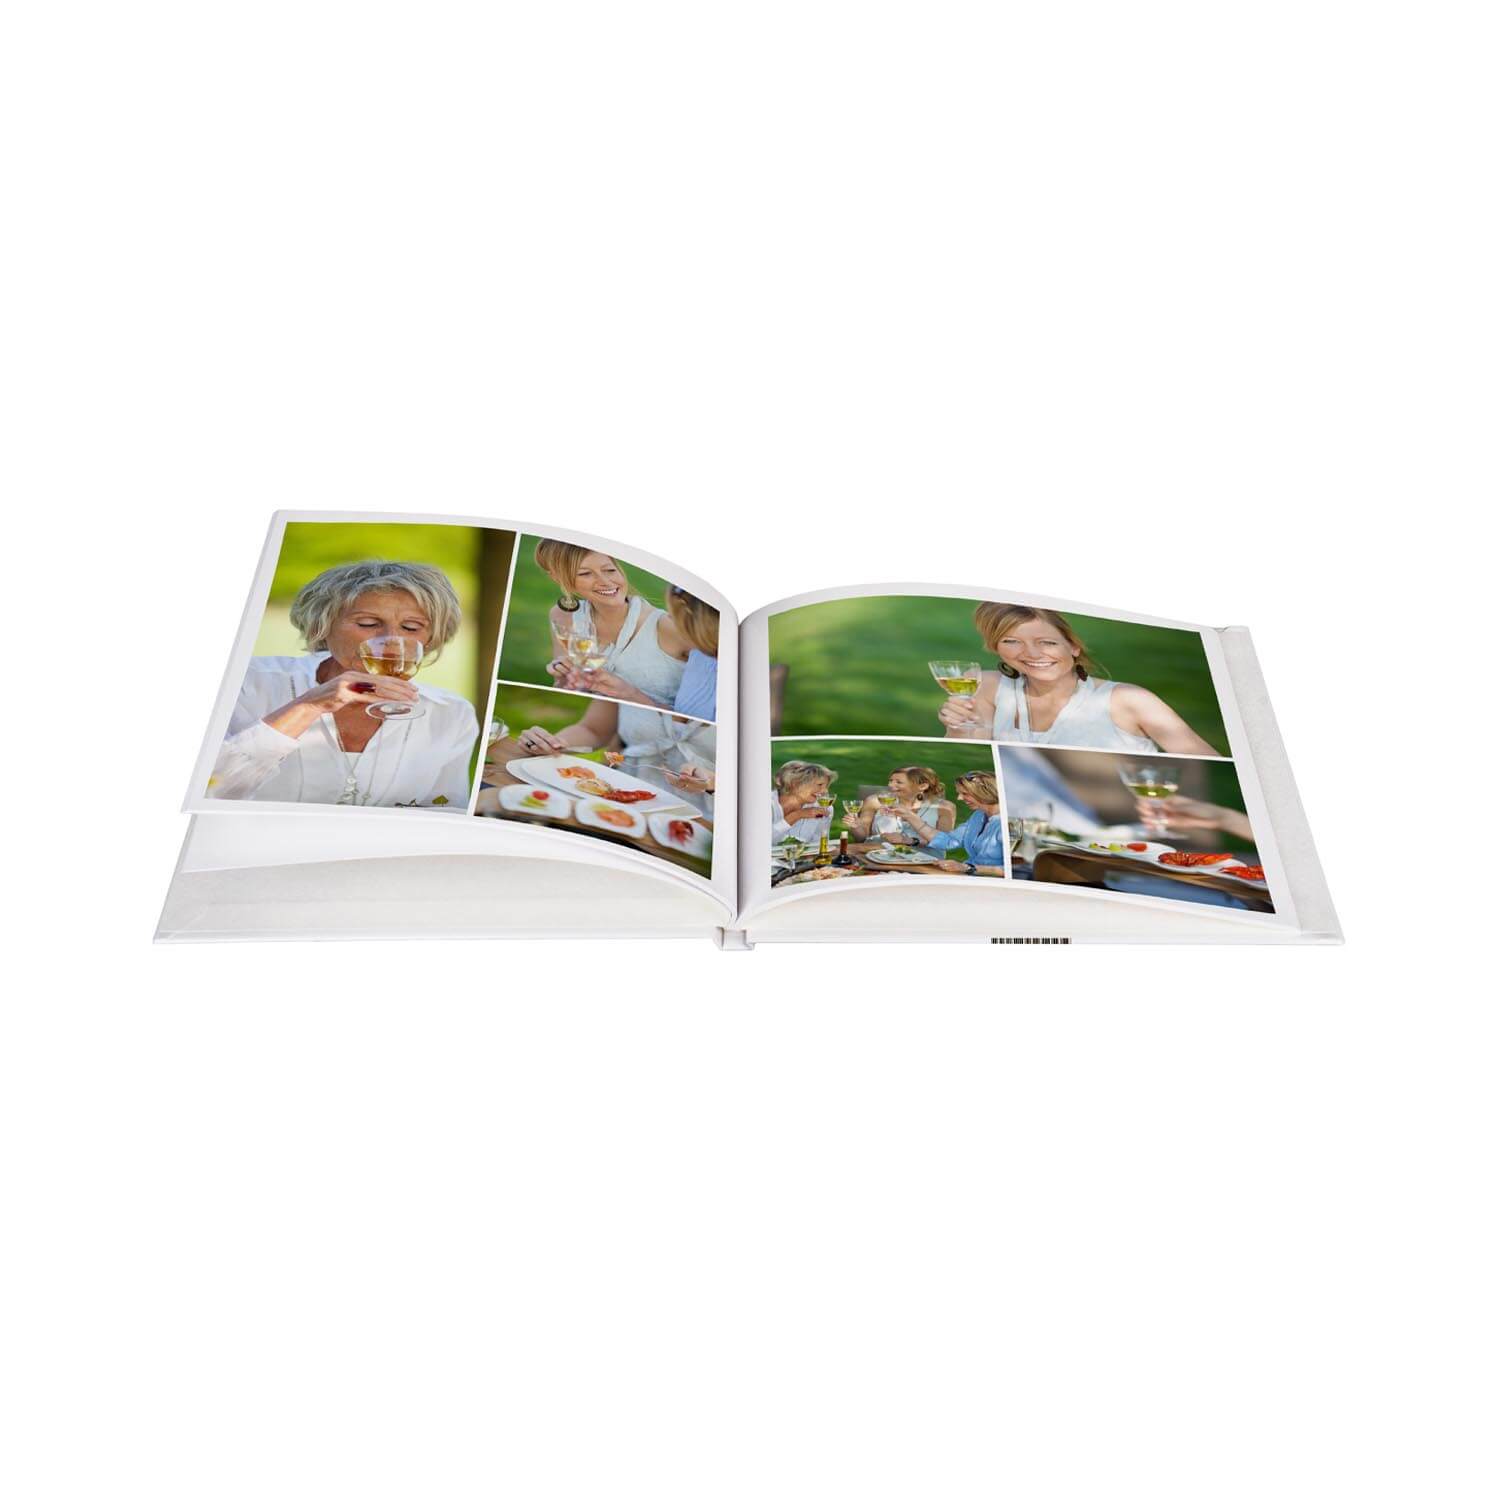 Fotobuch Hardcover individuell bedruckbar, hochkant/quer/quadratisch, Matt/Hochglanz